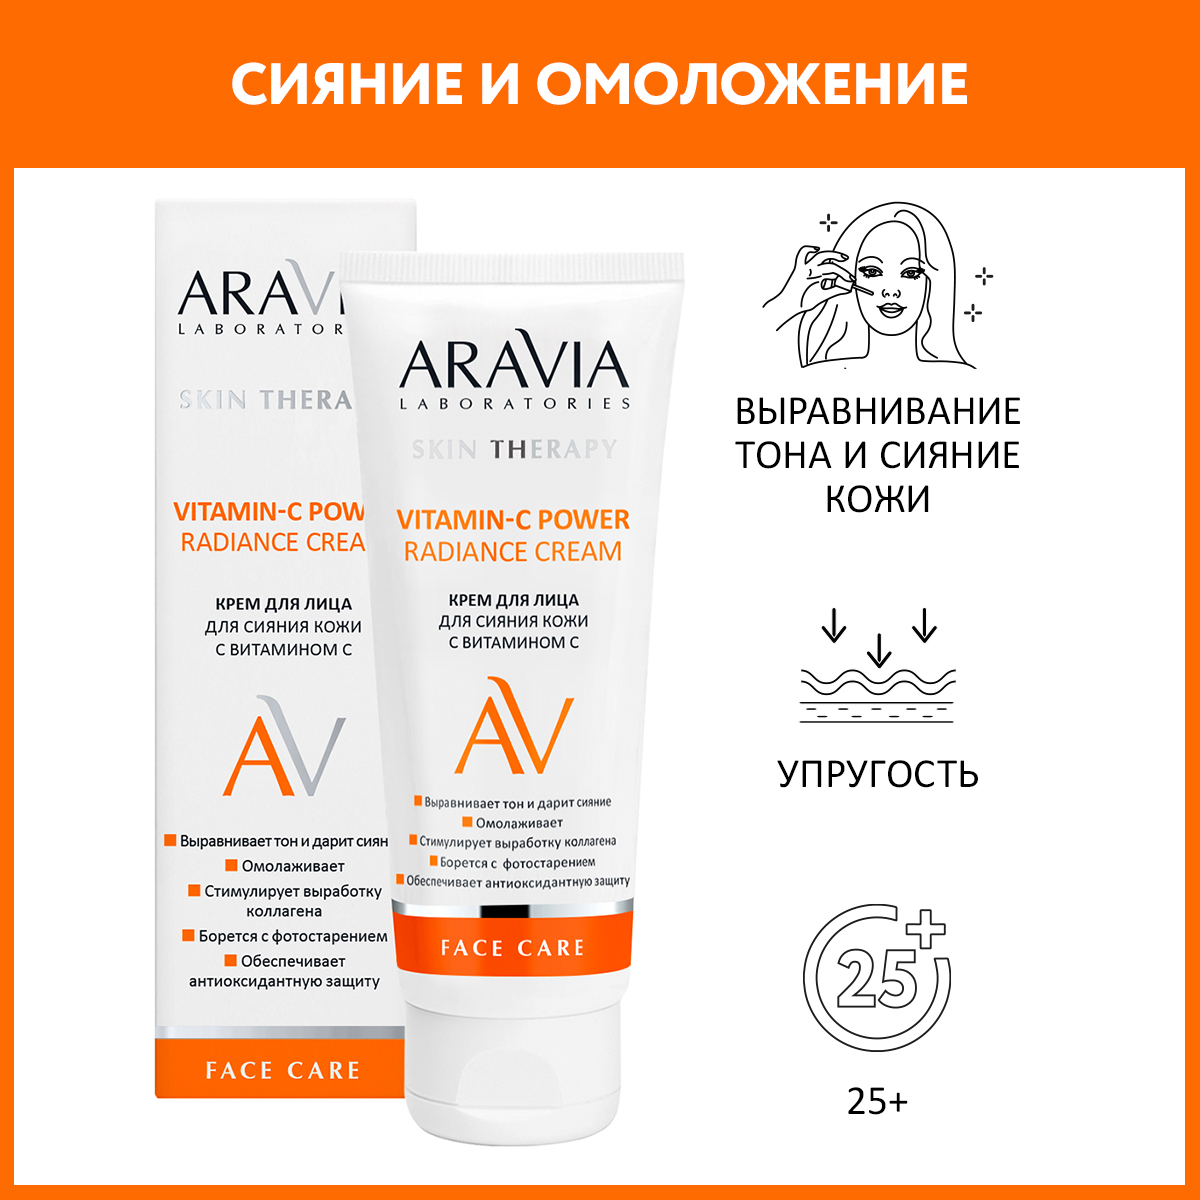 Крем для лица ARAVIA Laboratories для сияния кожи с Витамином С Vitamin-C Power Radiance Cream 50 мл - фото 1